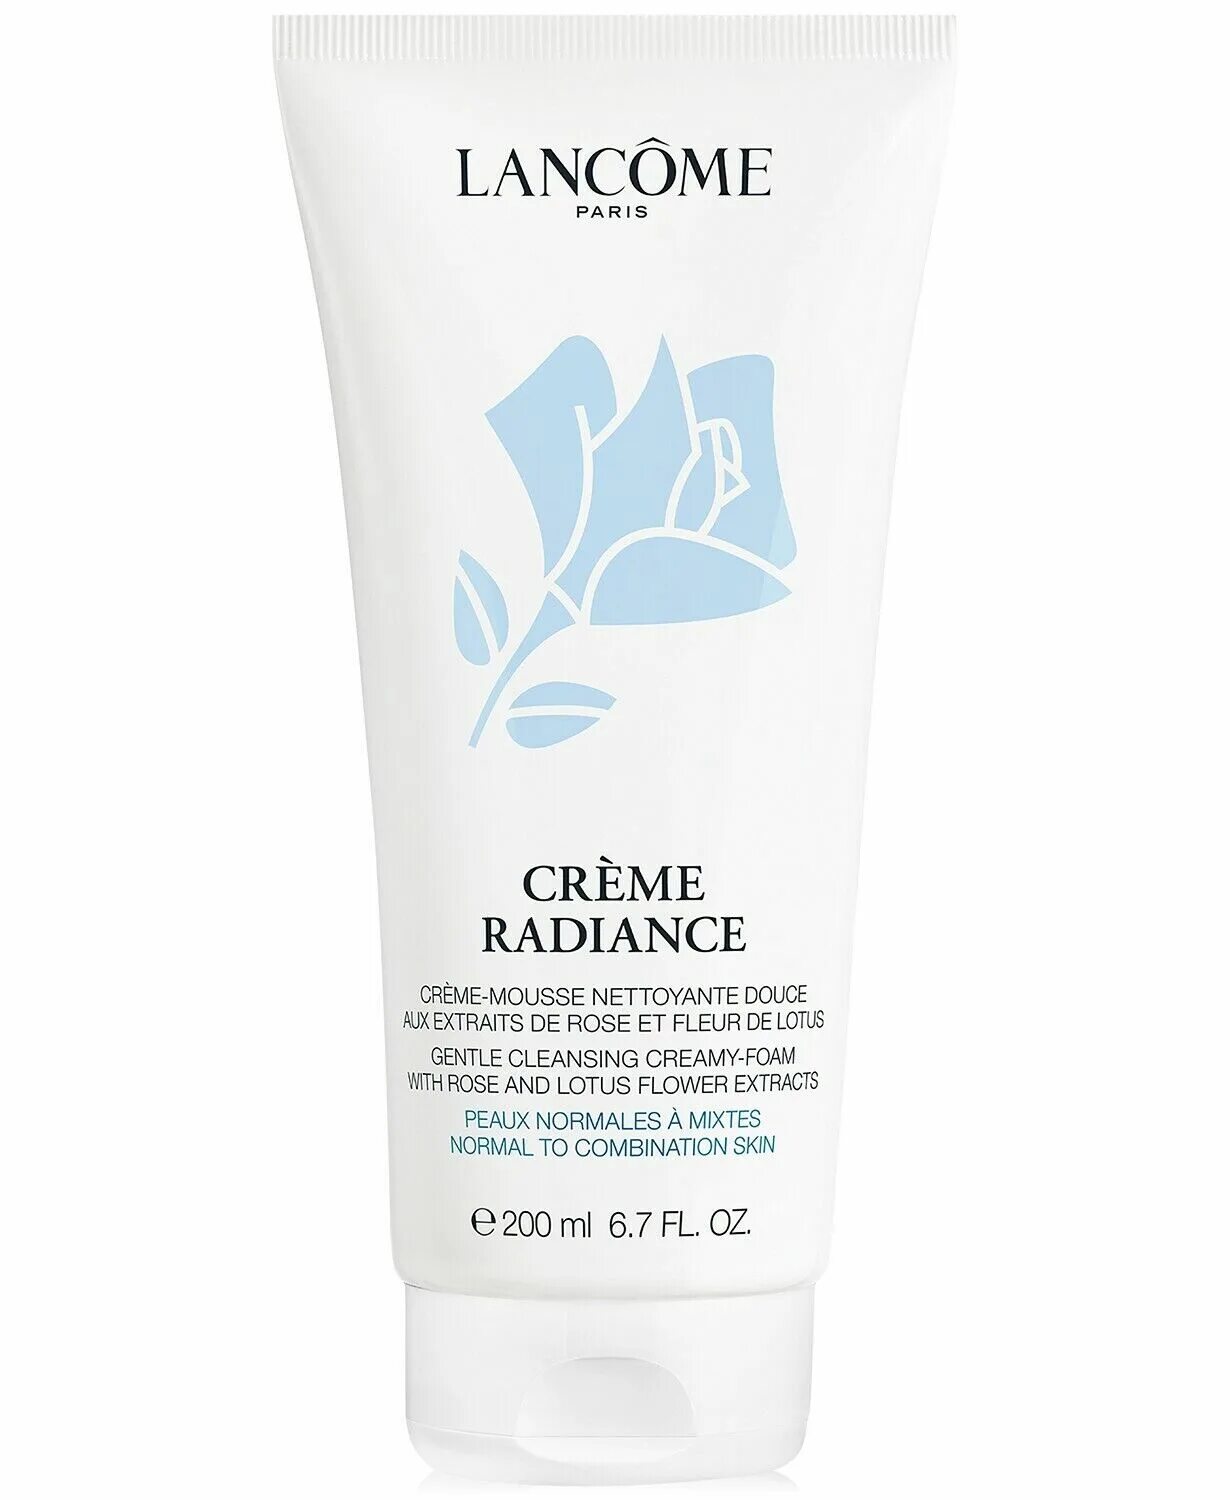 Creme Radiance Lancome. Lancome Creme Mousse Confort. Lancome Creme Radiance gentle Cleansing. Lancome face Cream. Cleansing gel foam